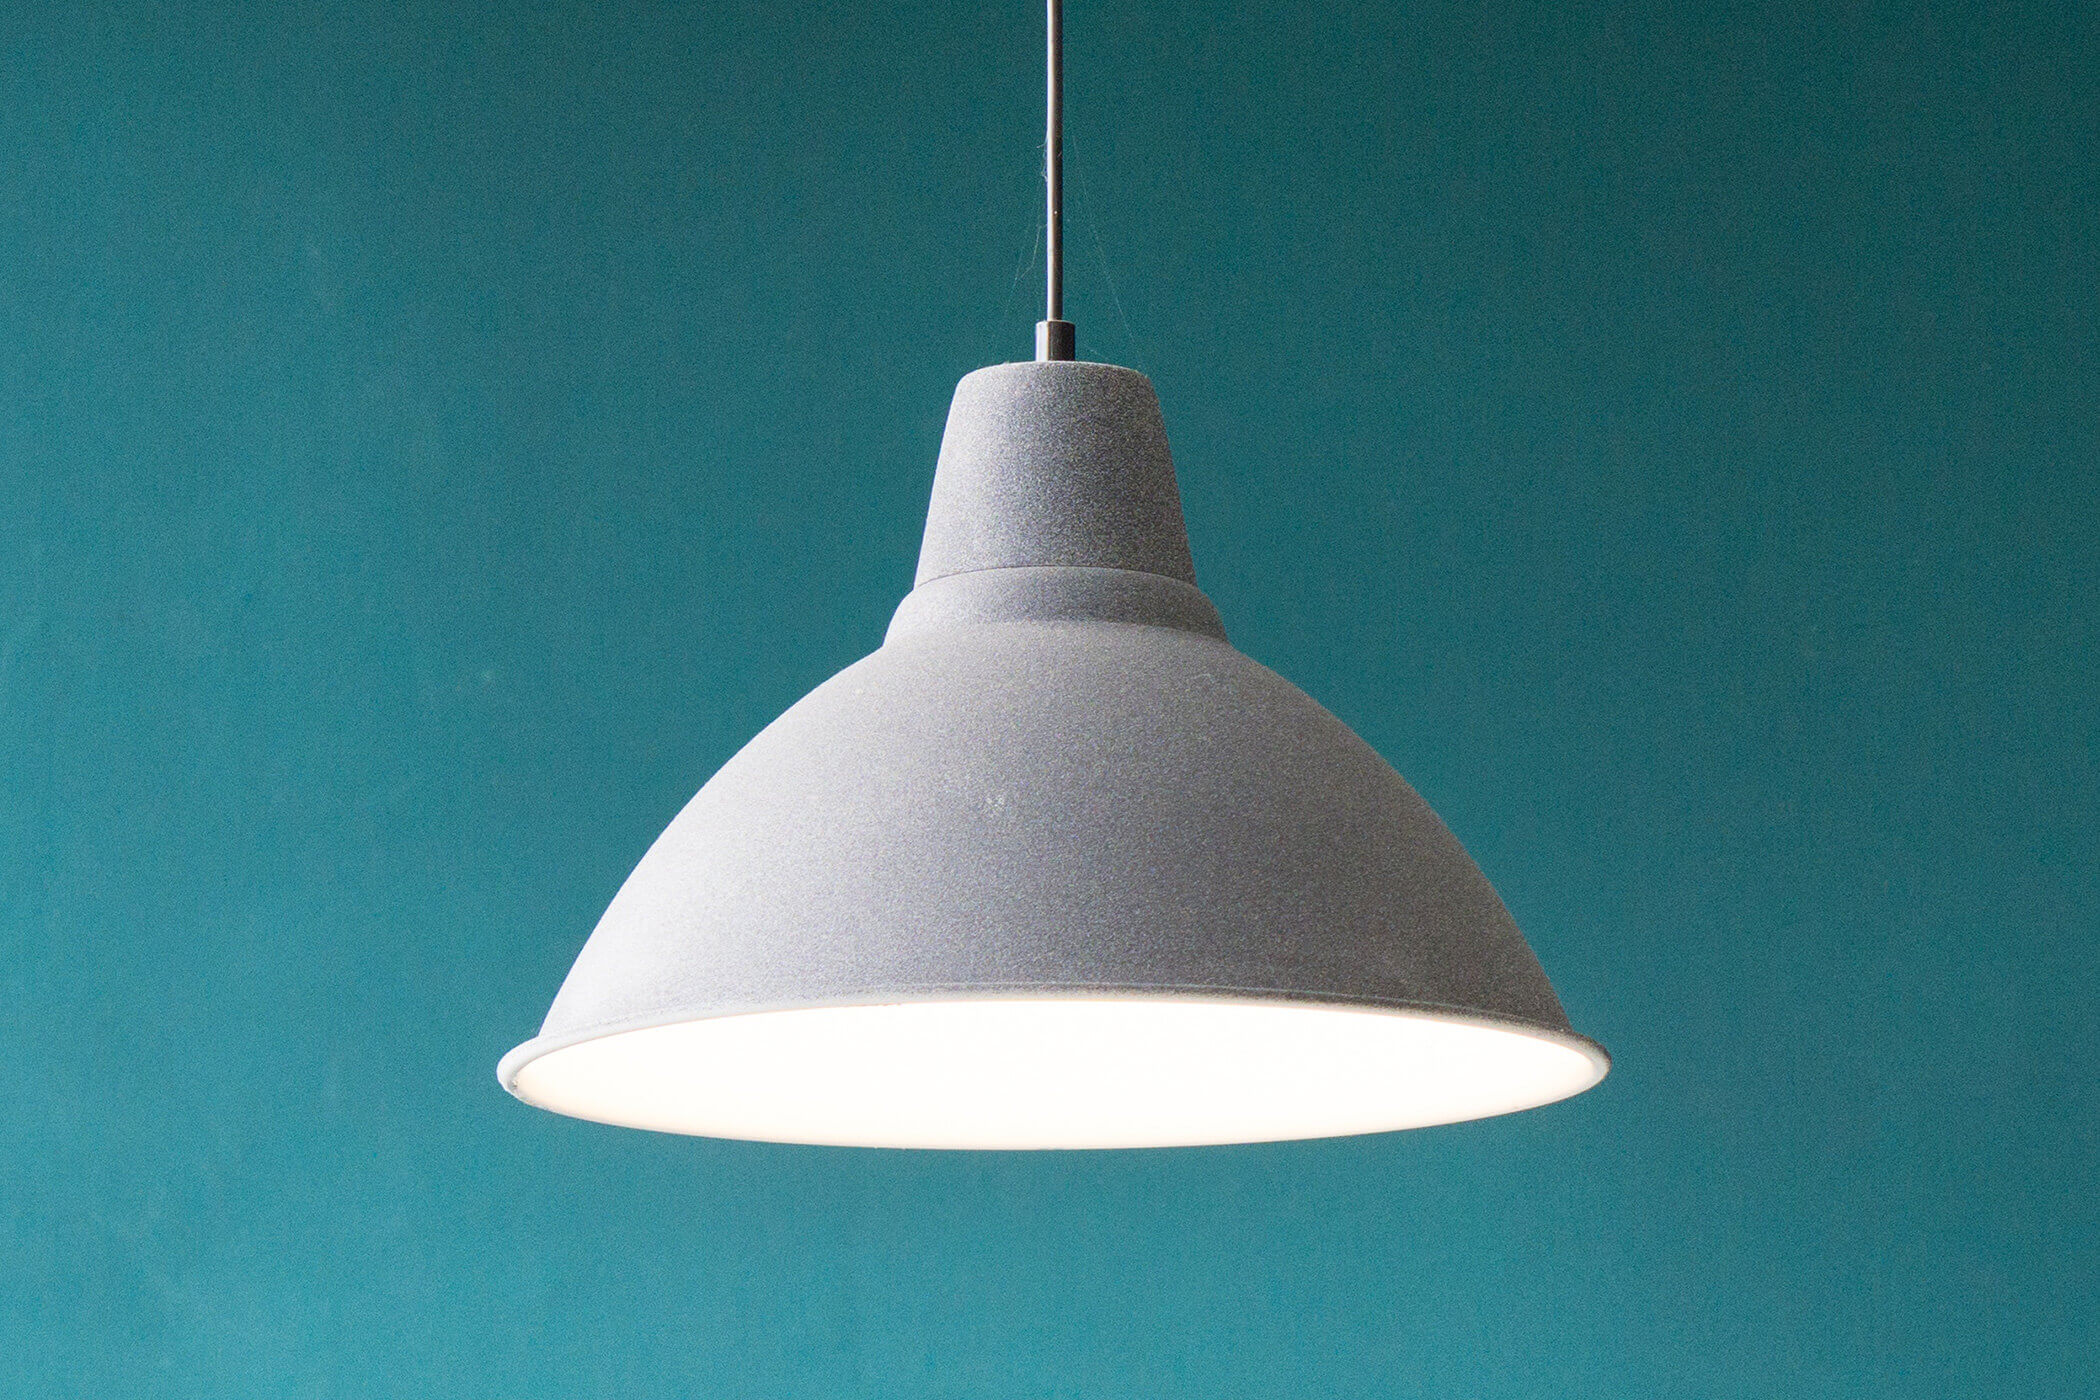 Lamp Image